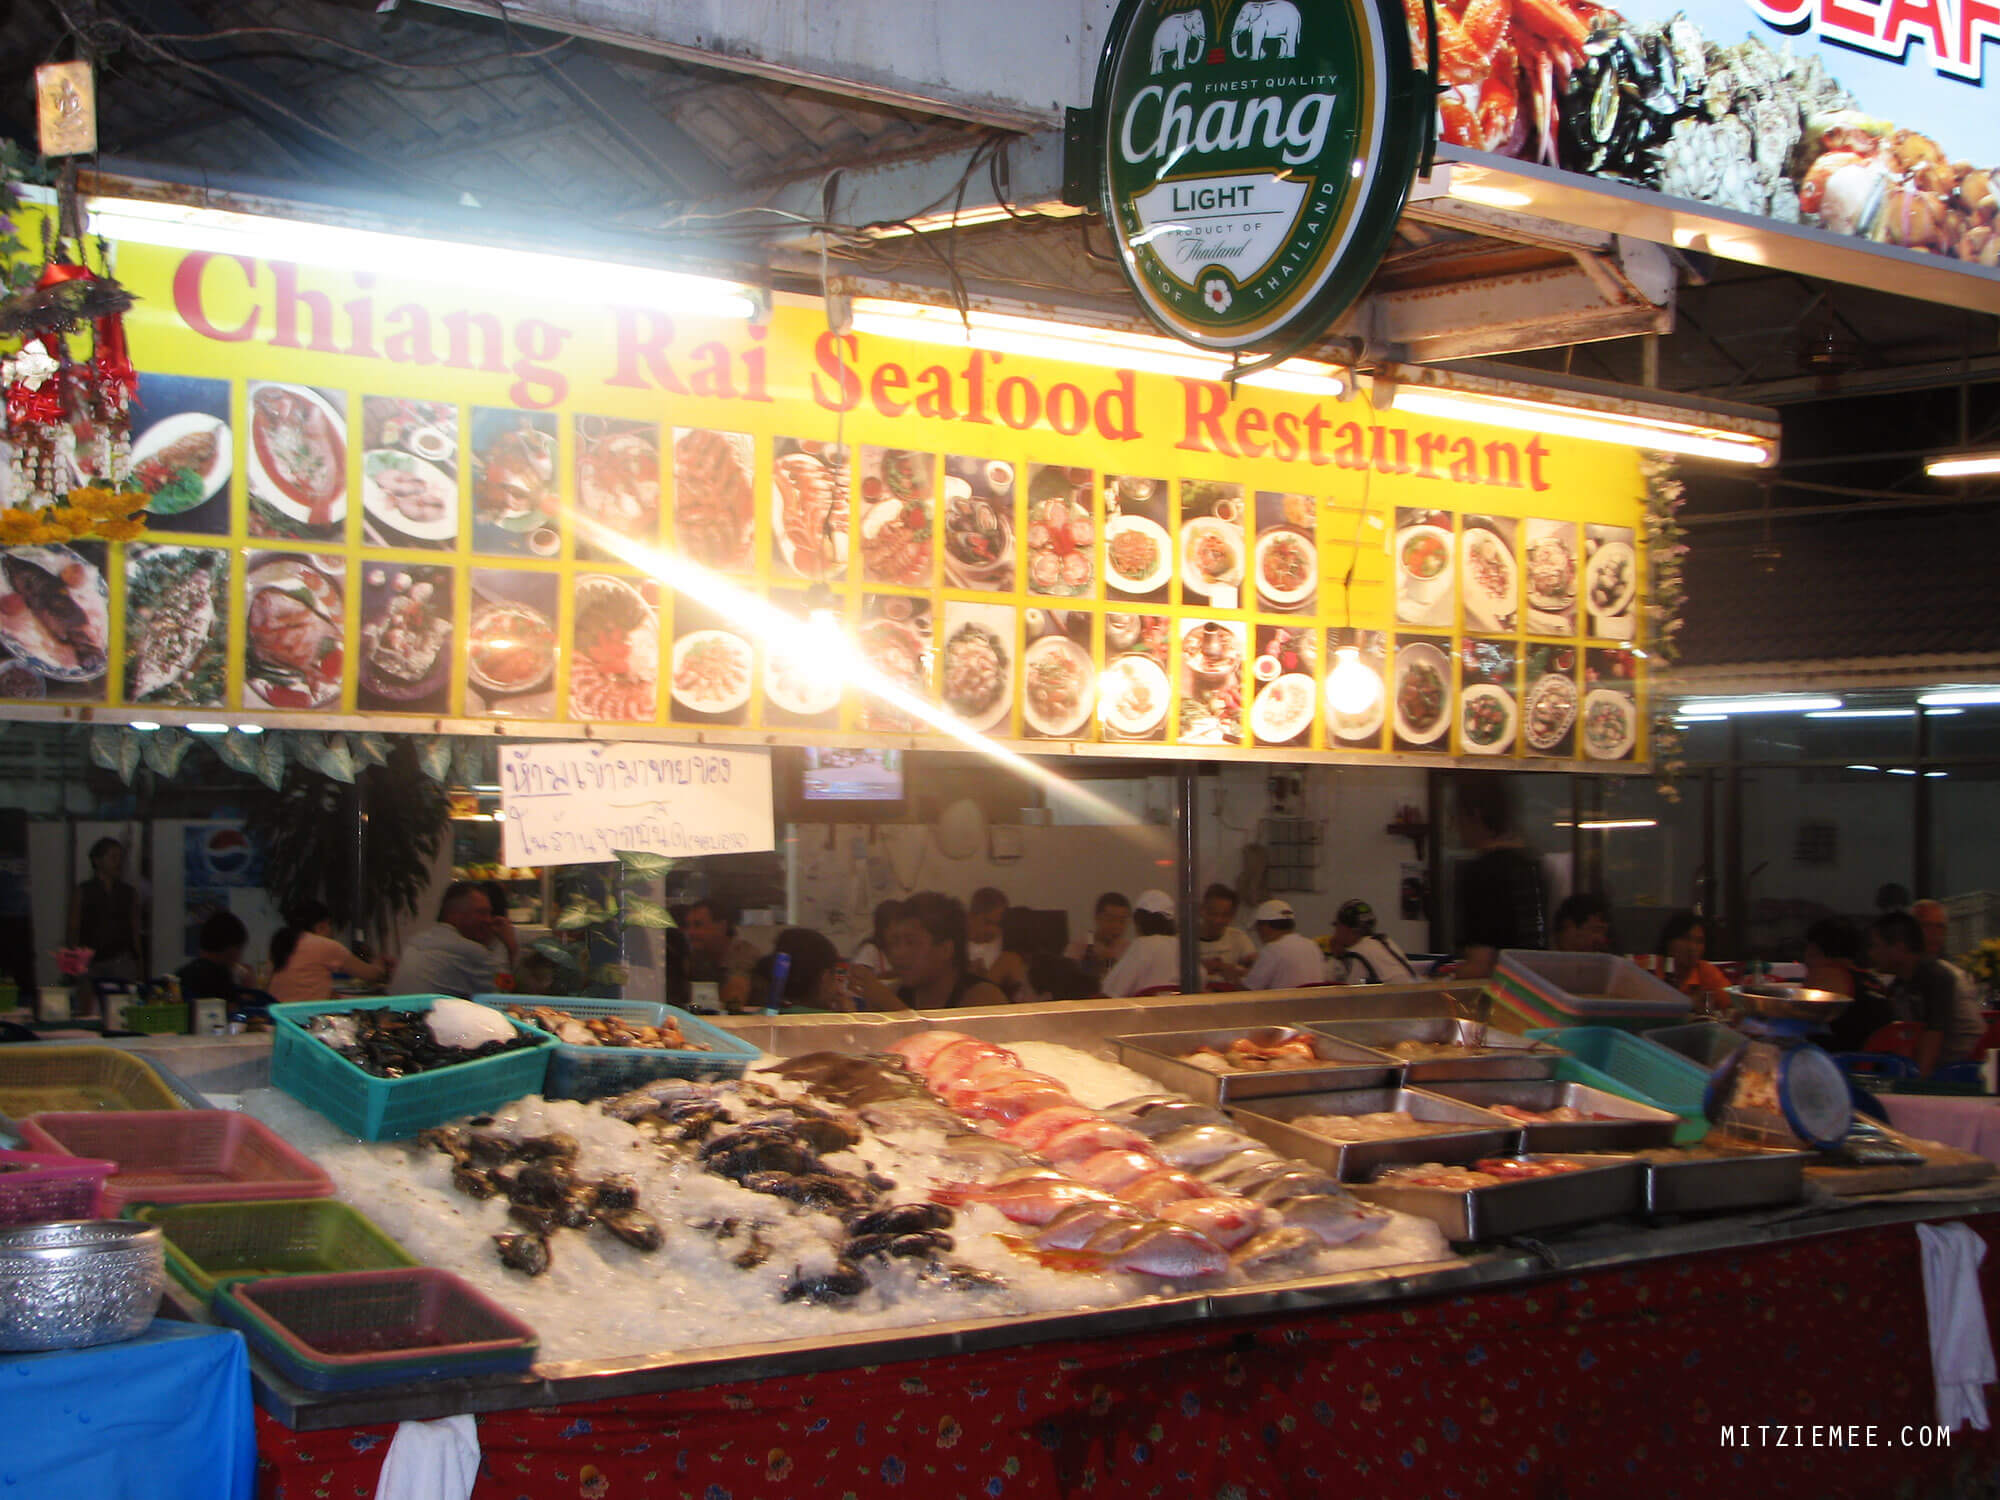 Chiang Rai Seafood Restaurant in Patong, Phuket